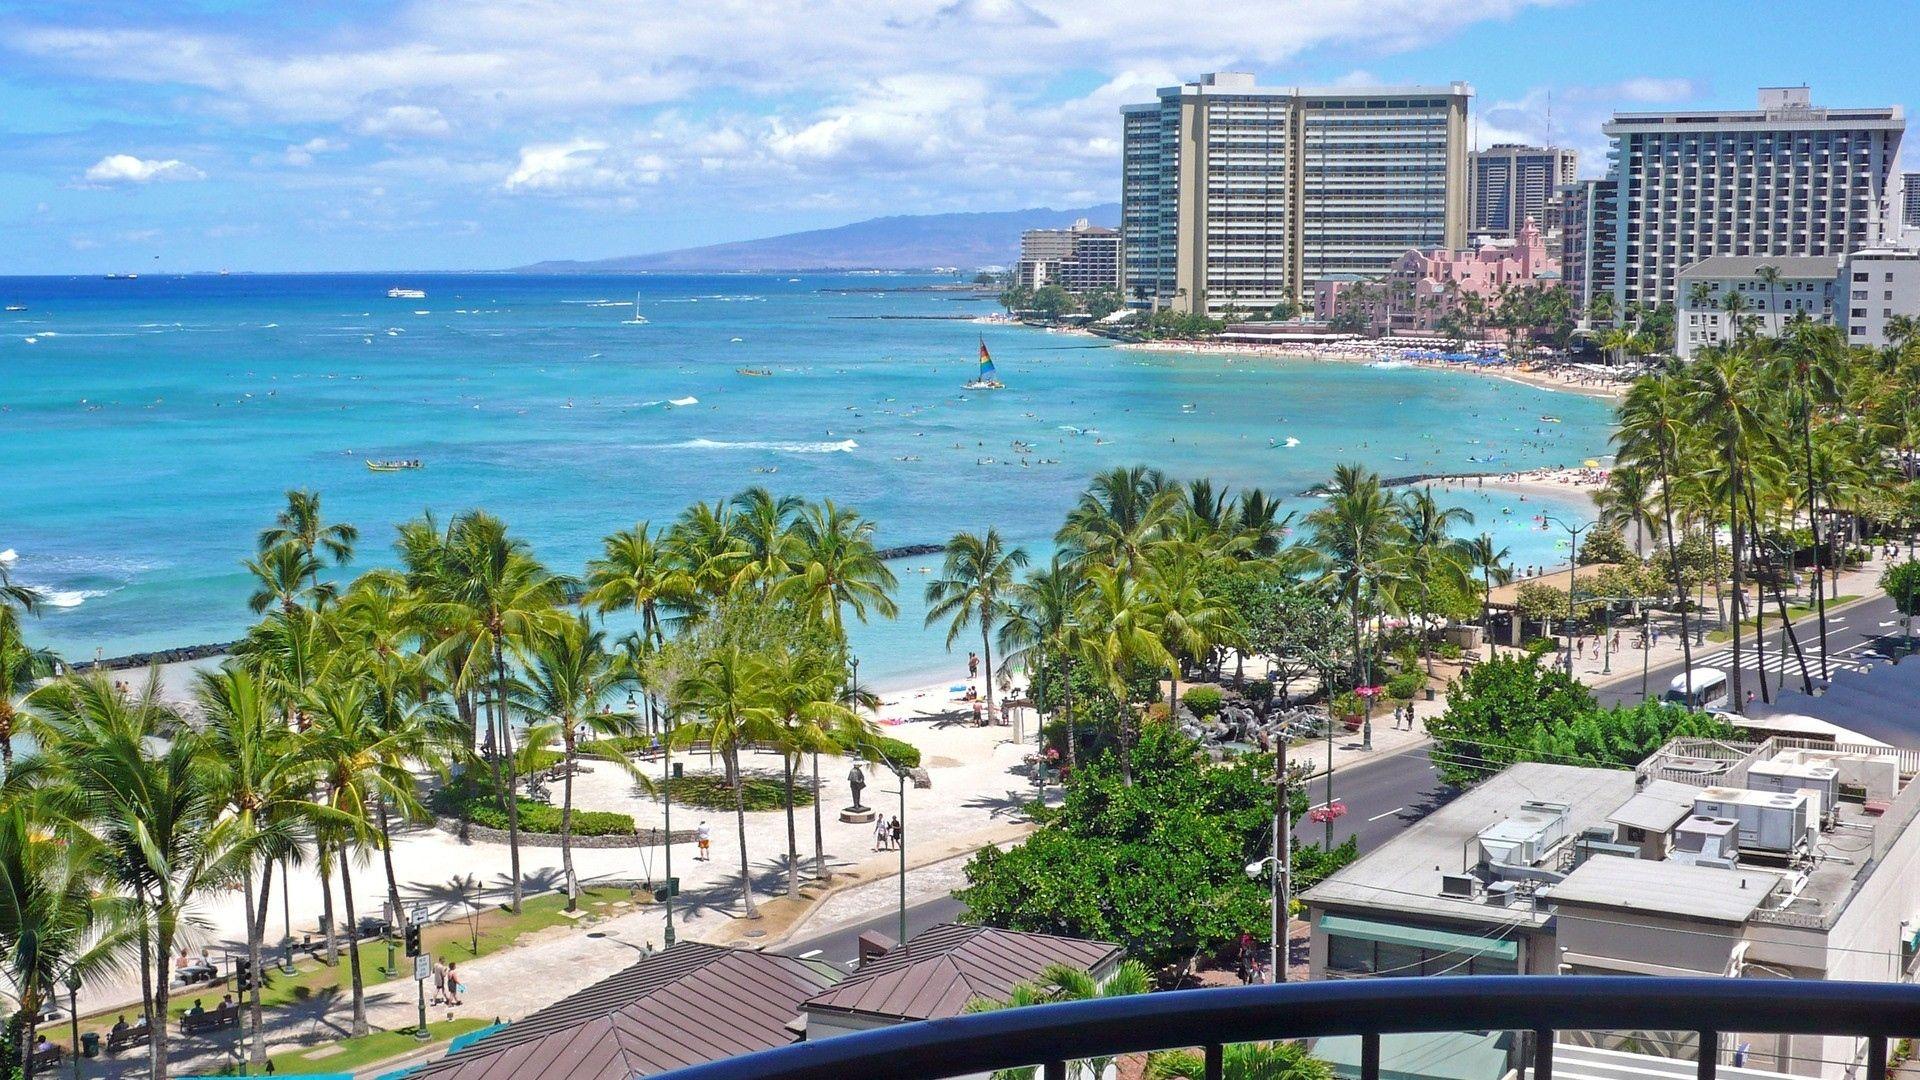 Download Wallpapers Honolulu hawaii beach, United states